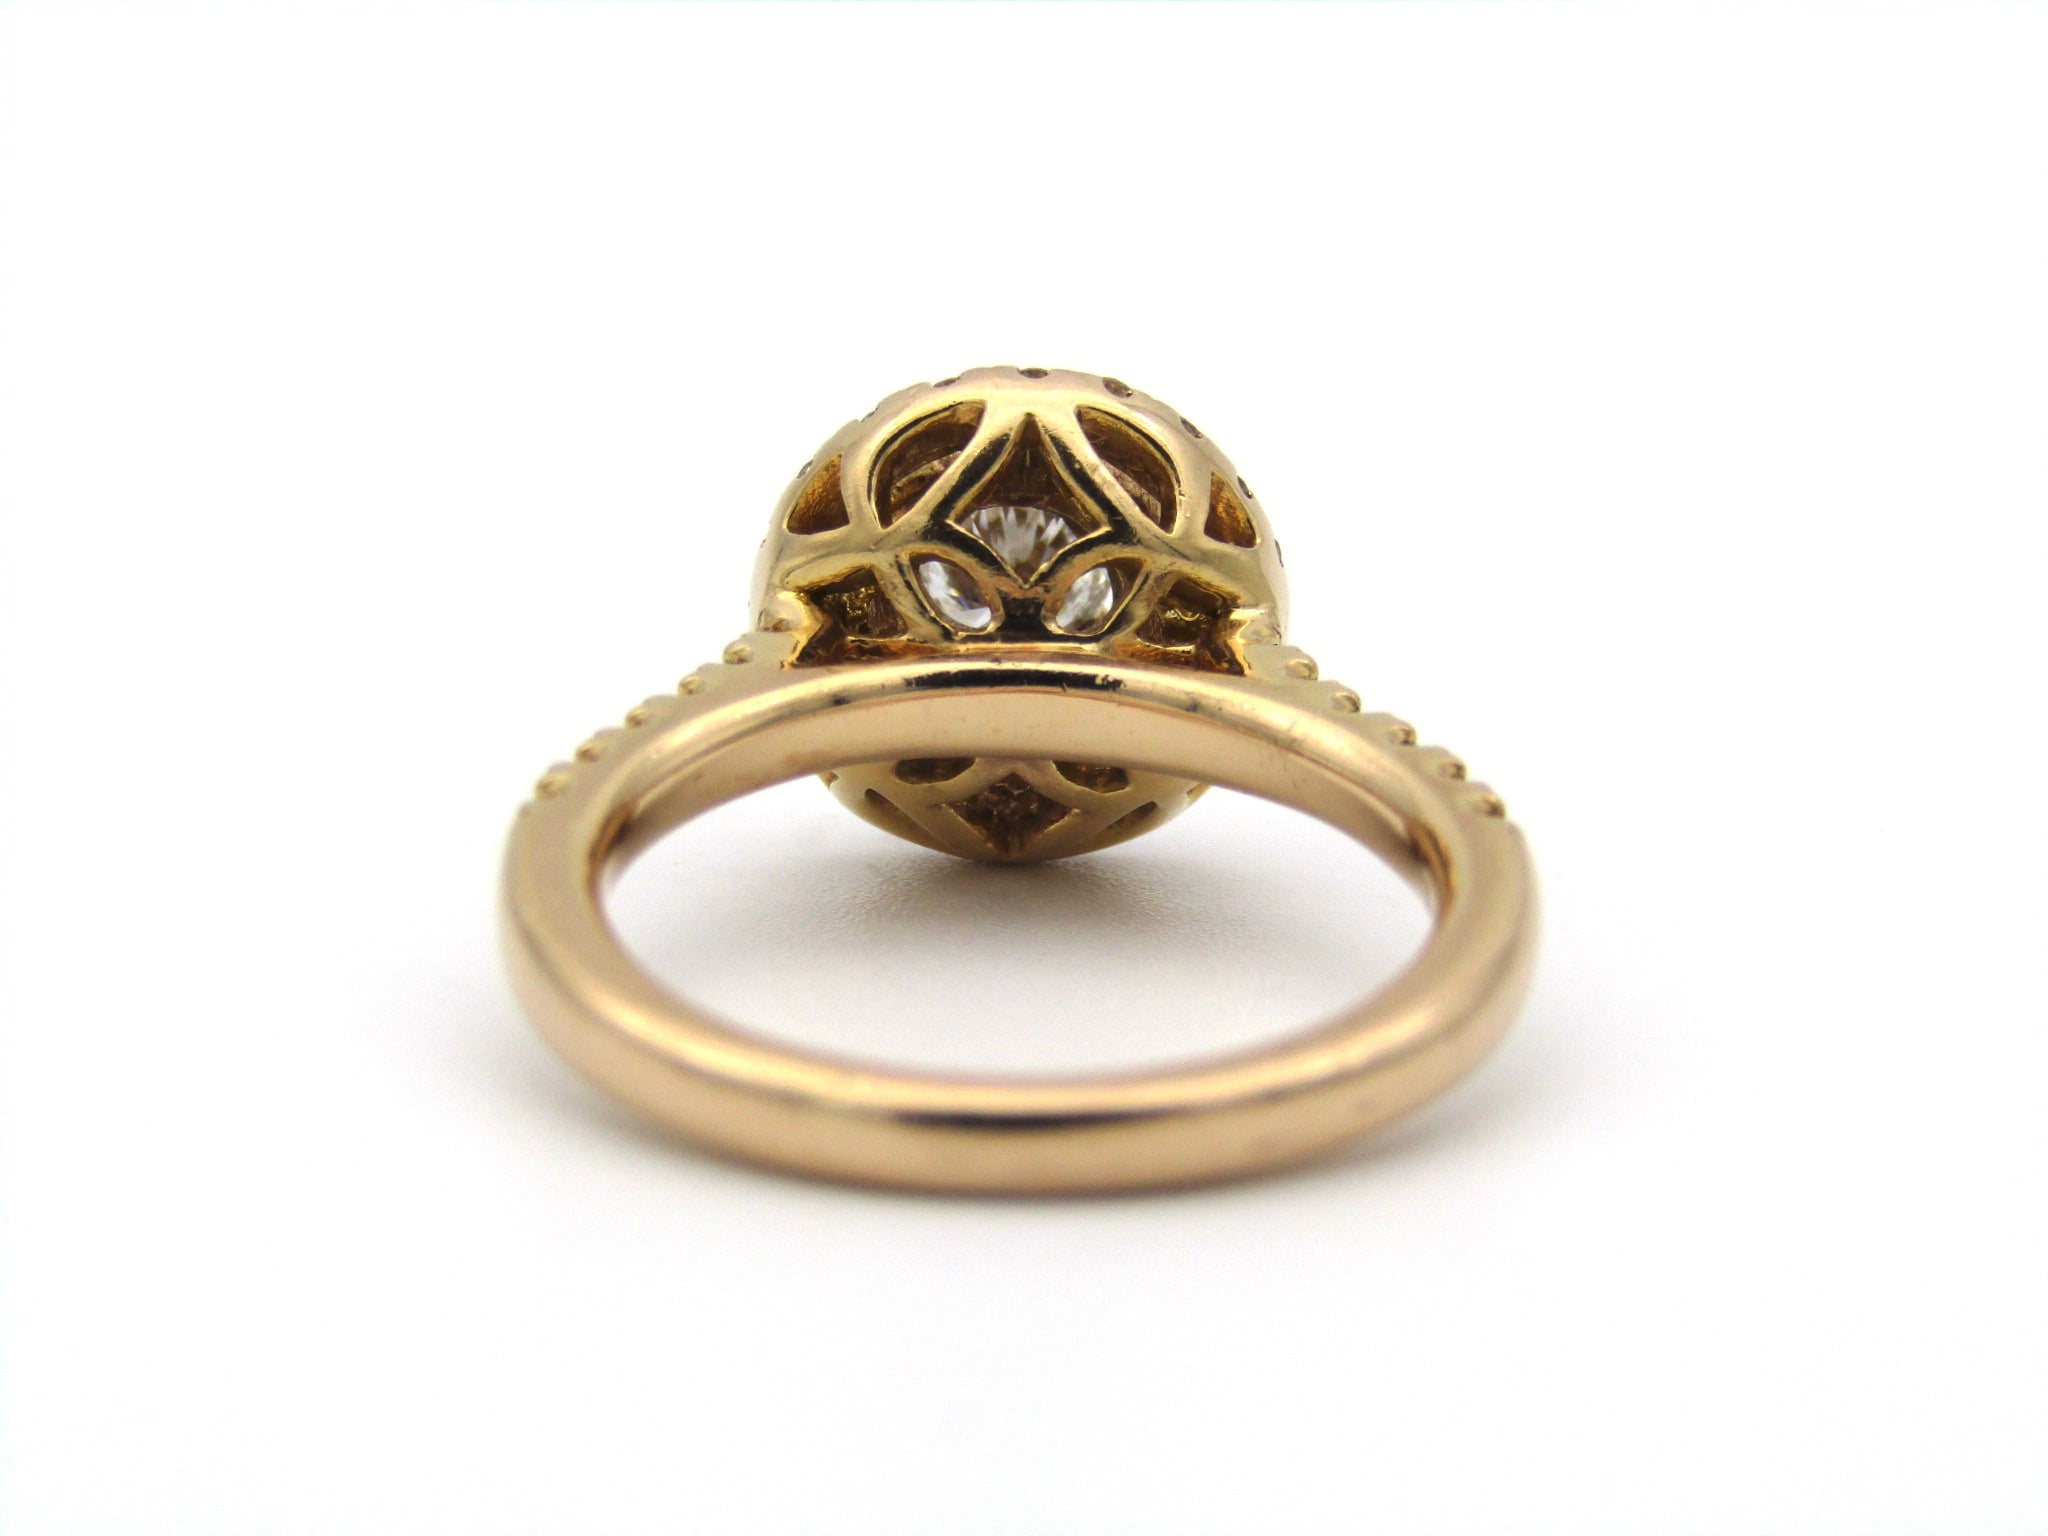 18K gold diamond halo ring.